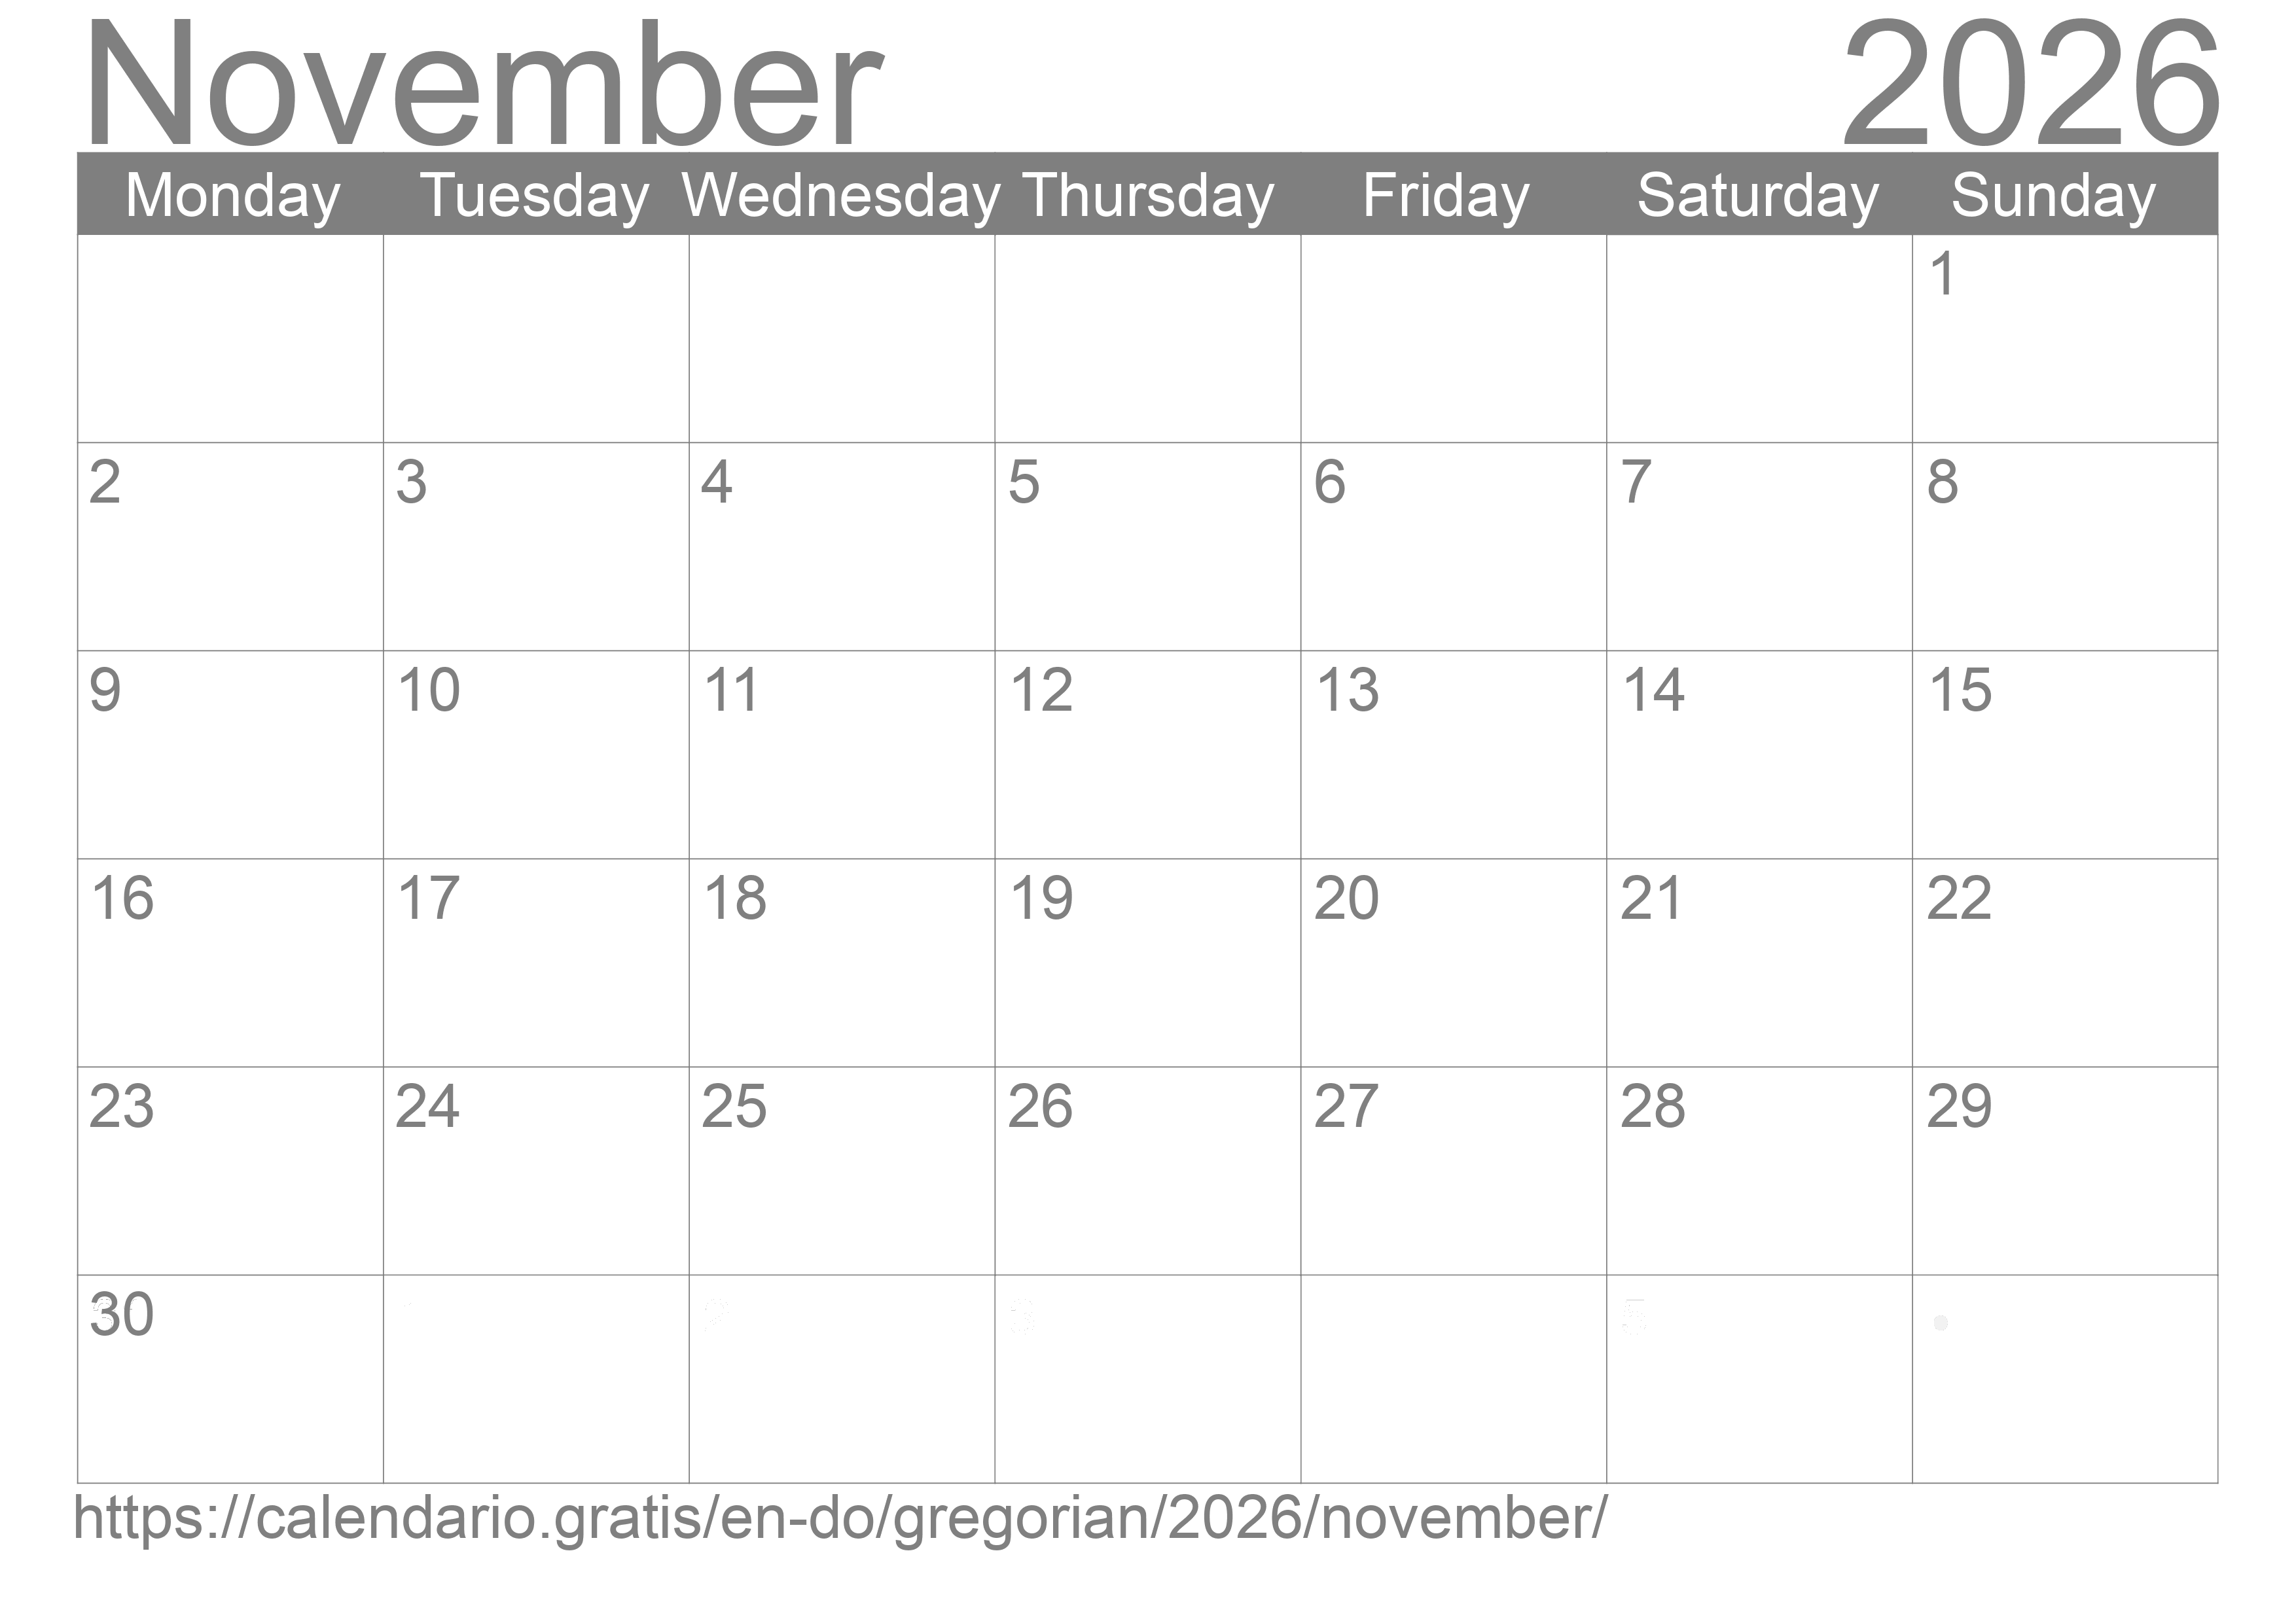 Calendar November 2026 to print